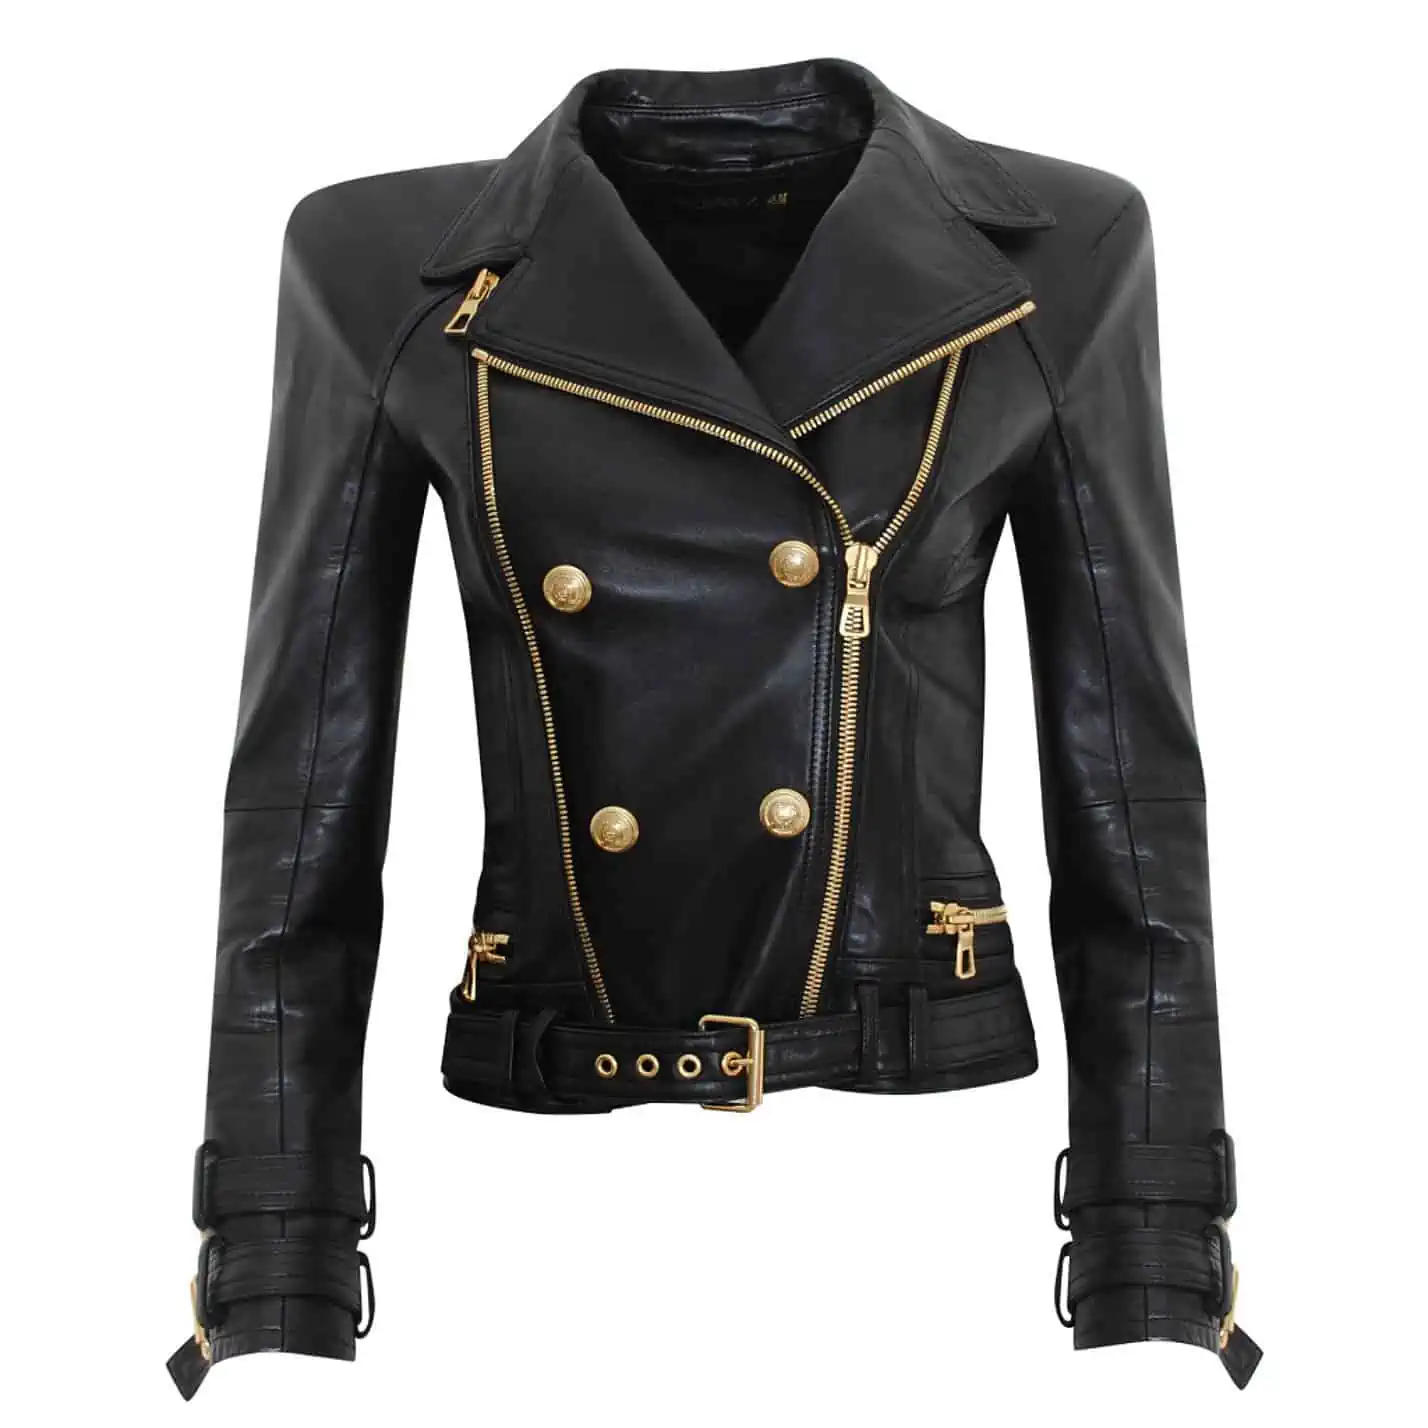 Kenya Moore's Black Leather Jacket